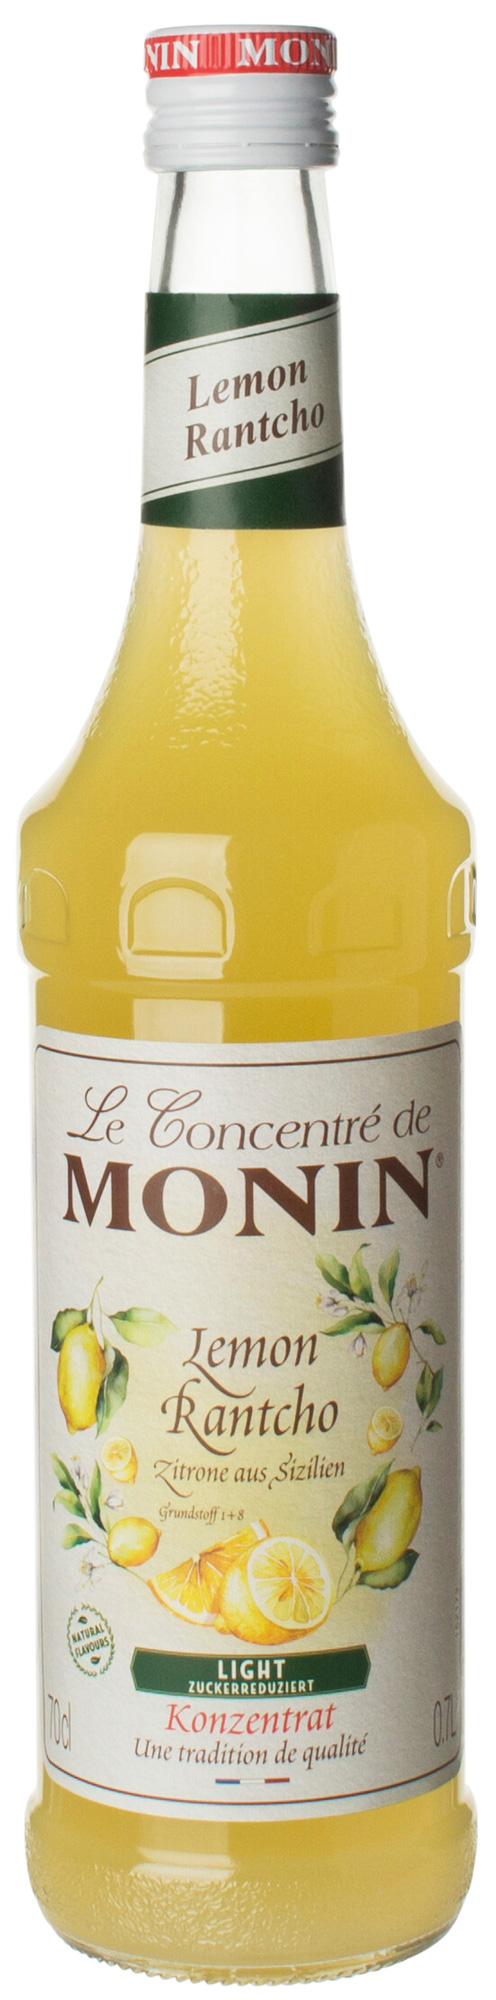 Rantcho Zitrone light - Monin Sirup (0,7l)